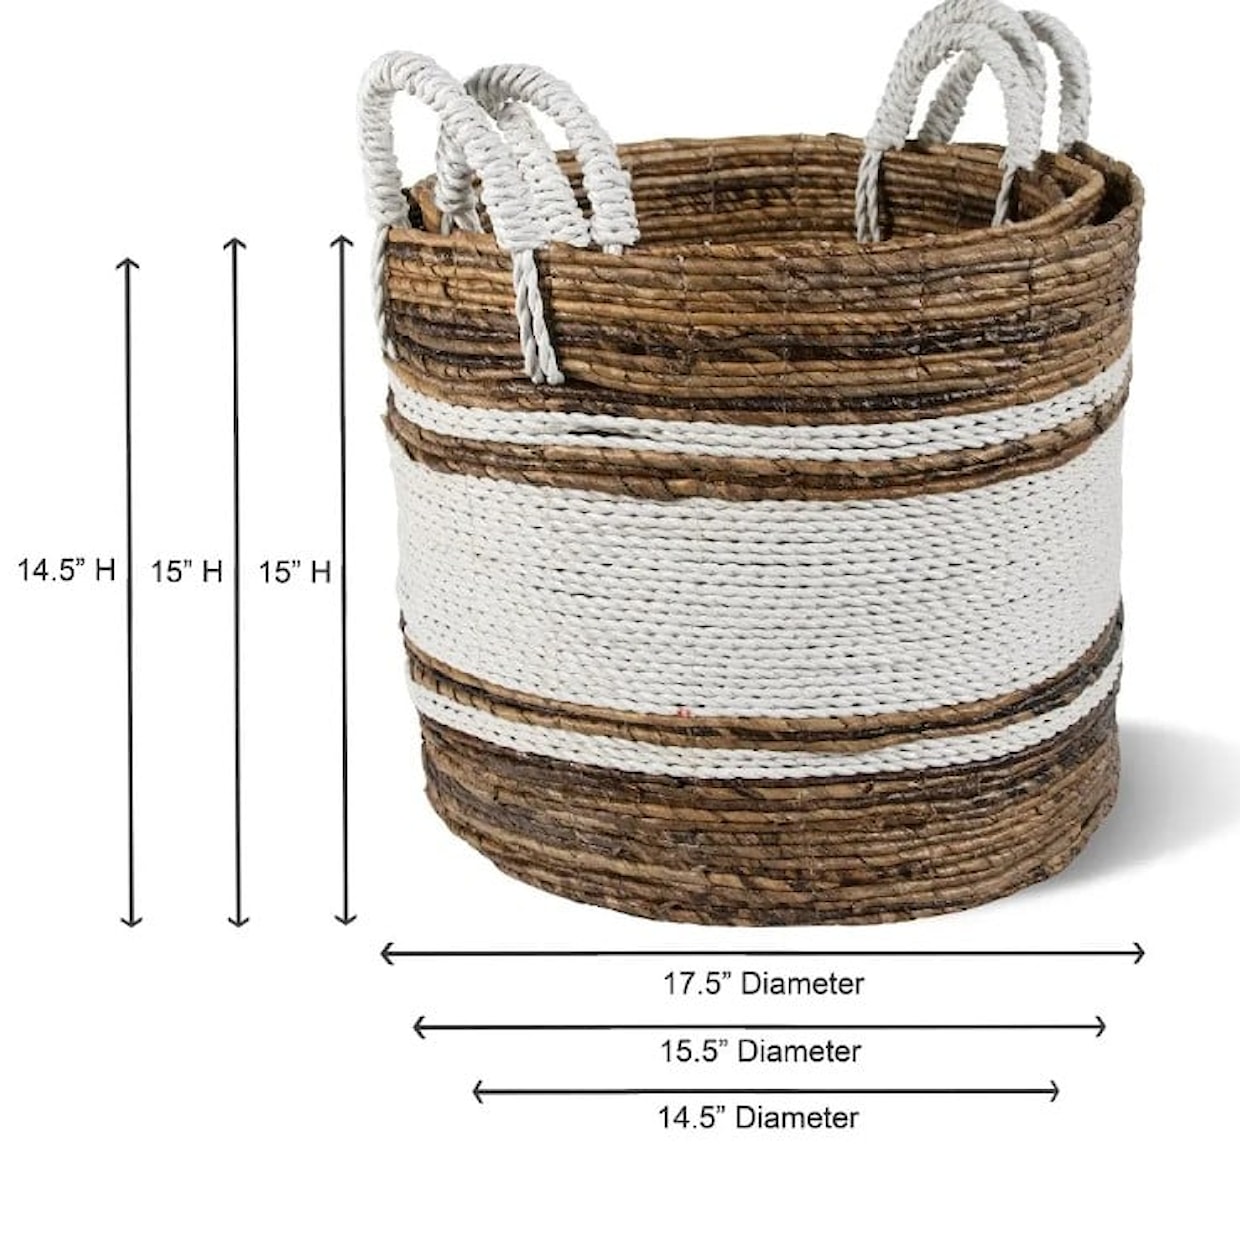 Ibolili Baskets and Sets BANANA LEAF BASKET W/ WHITE CENTER, RND- S/3